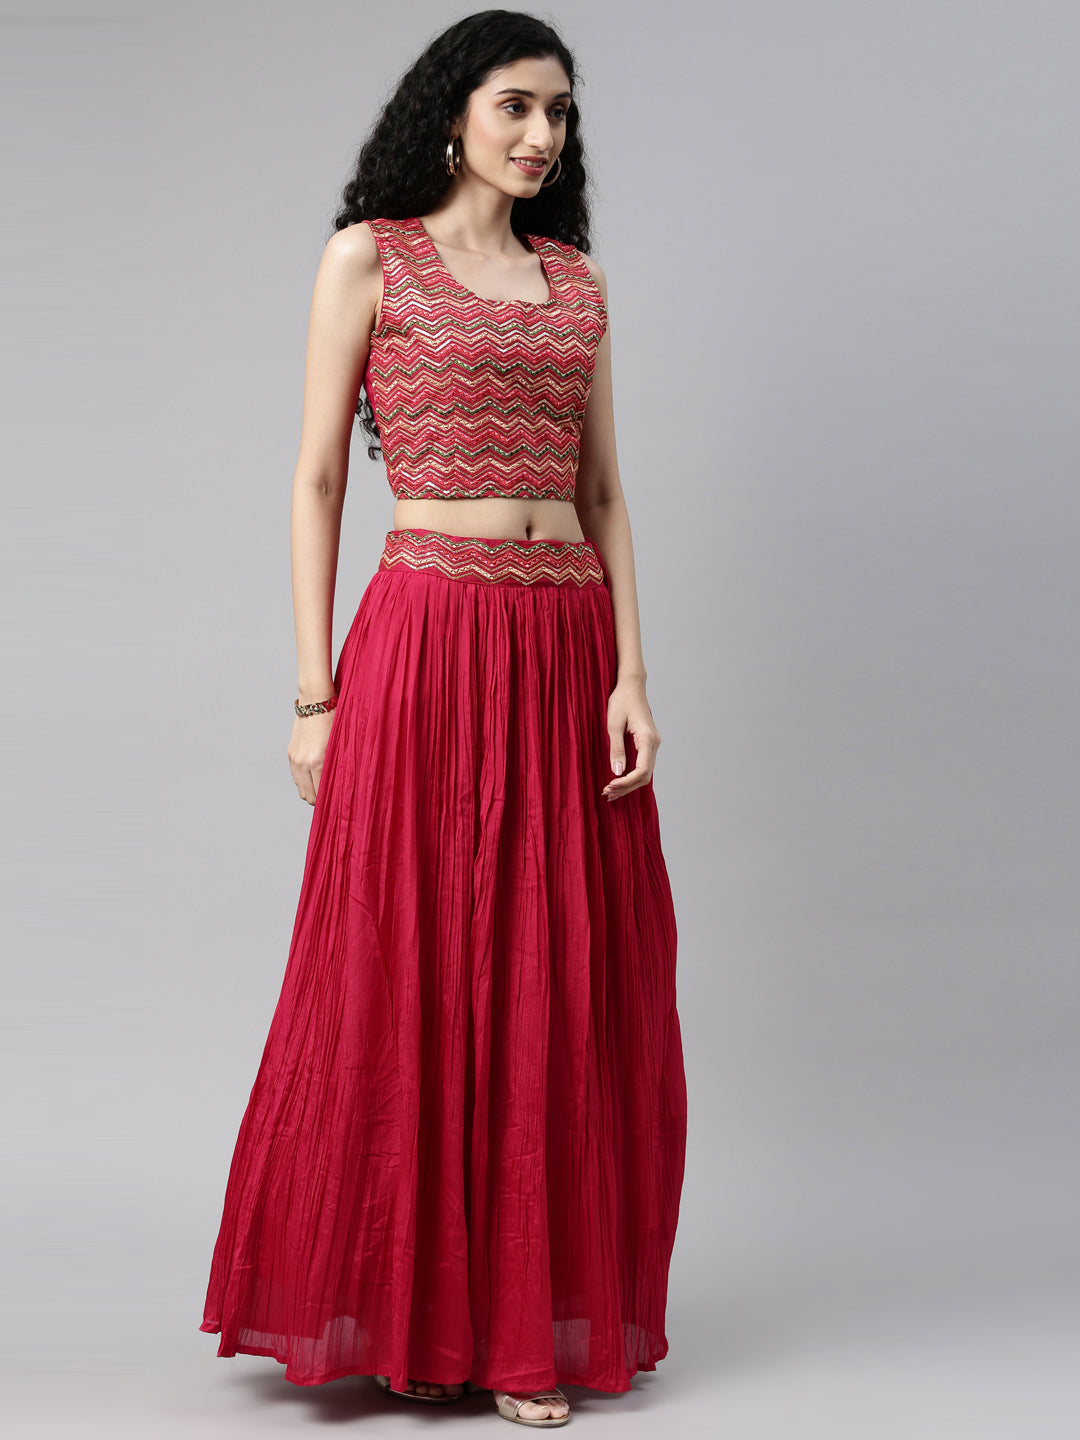 Neeru's Rani Color Silk Fabric Lehenga Set